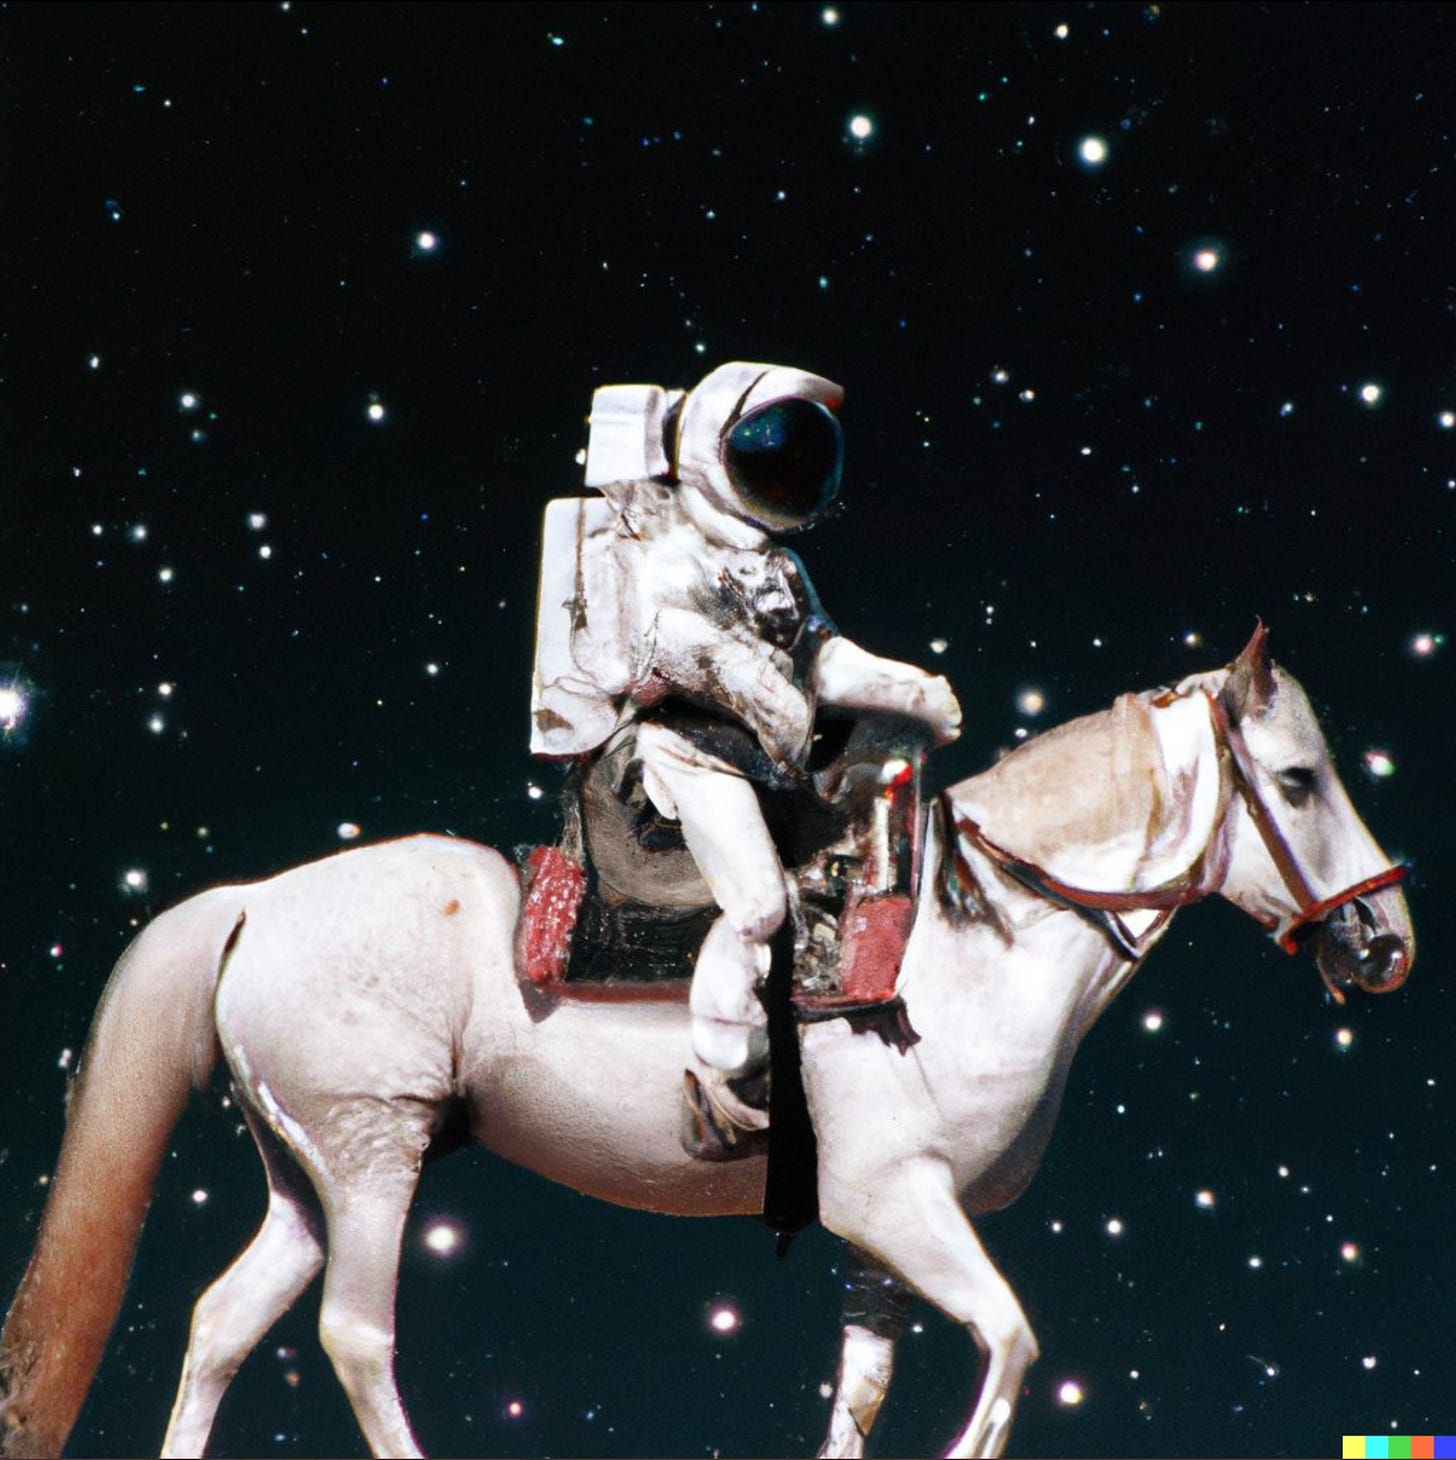 A photo of an astronaut riding a horse.